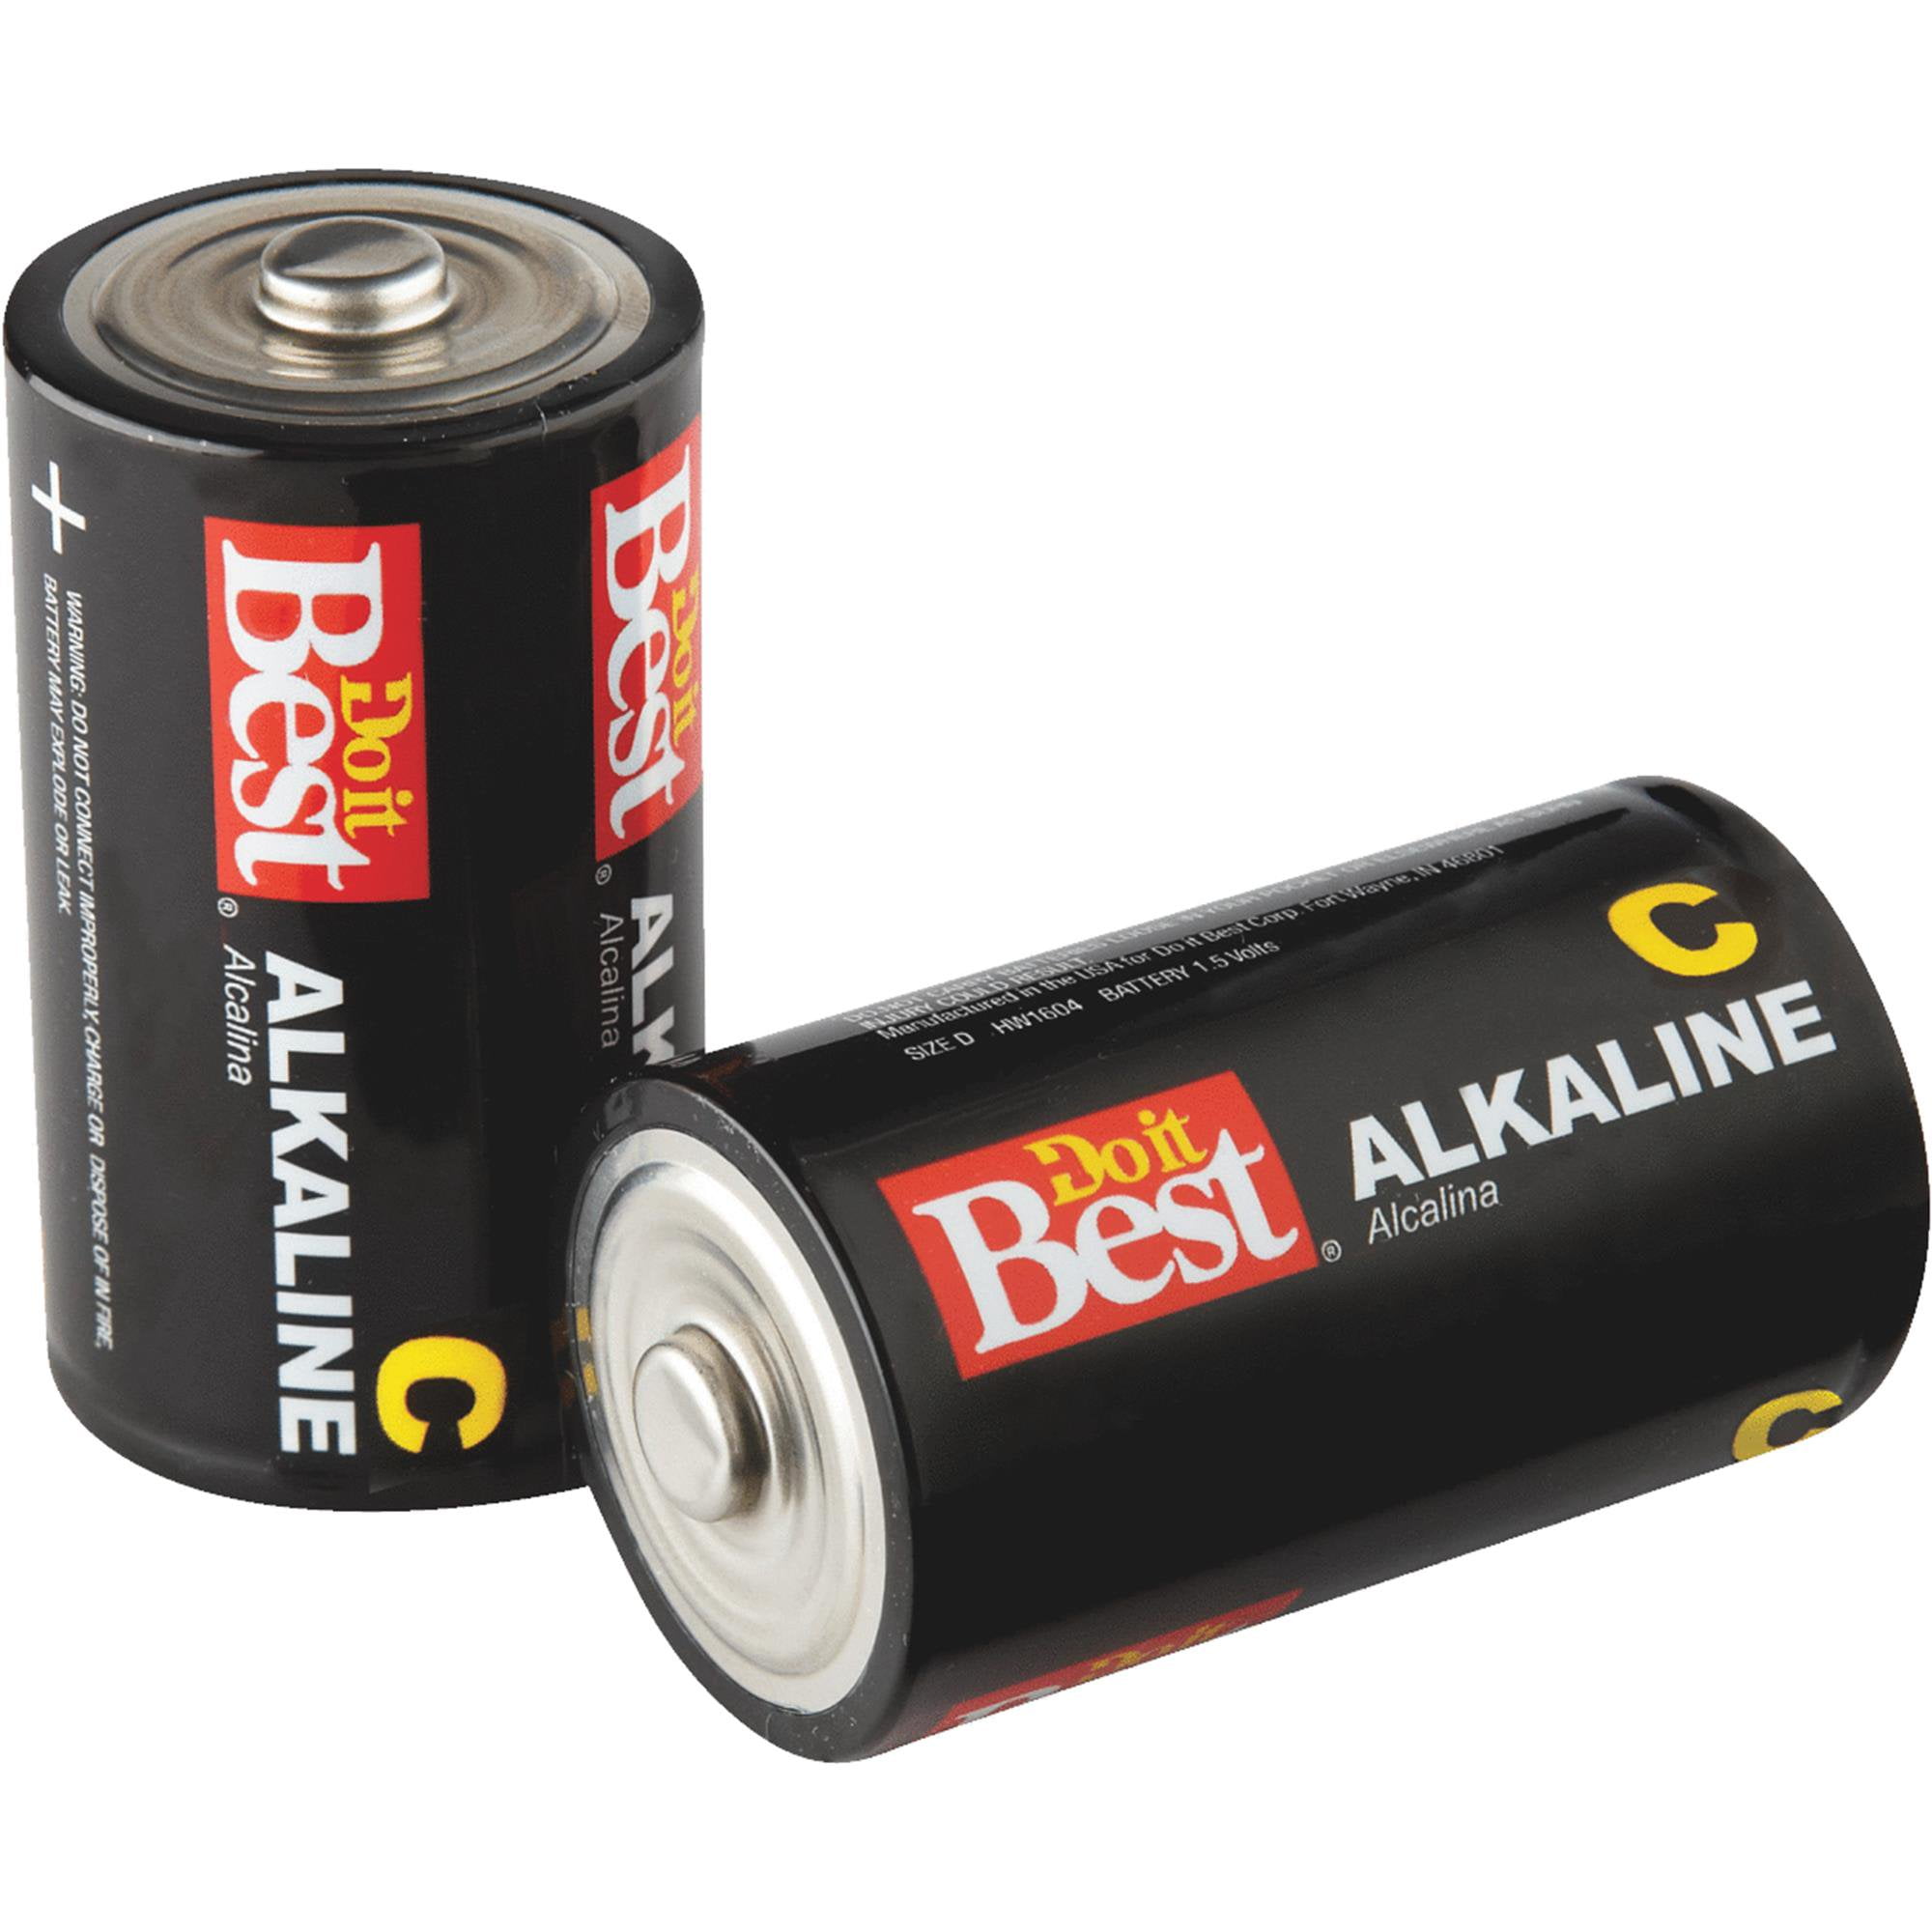 Good battery. Батарейка c. Alkaline Battery. Alkaline Batteries durable long lasting Battery. Alkaline Battery код.